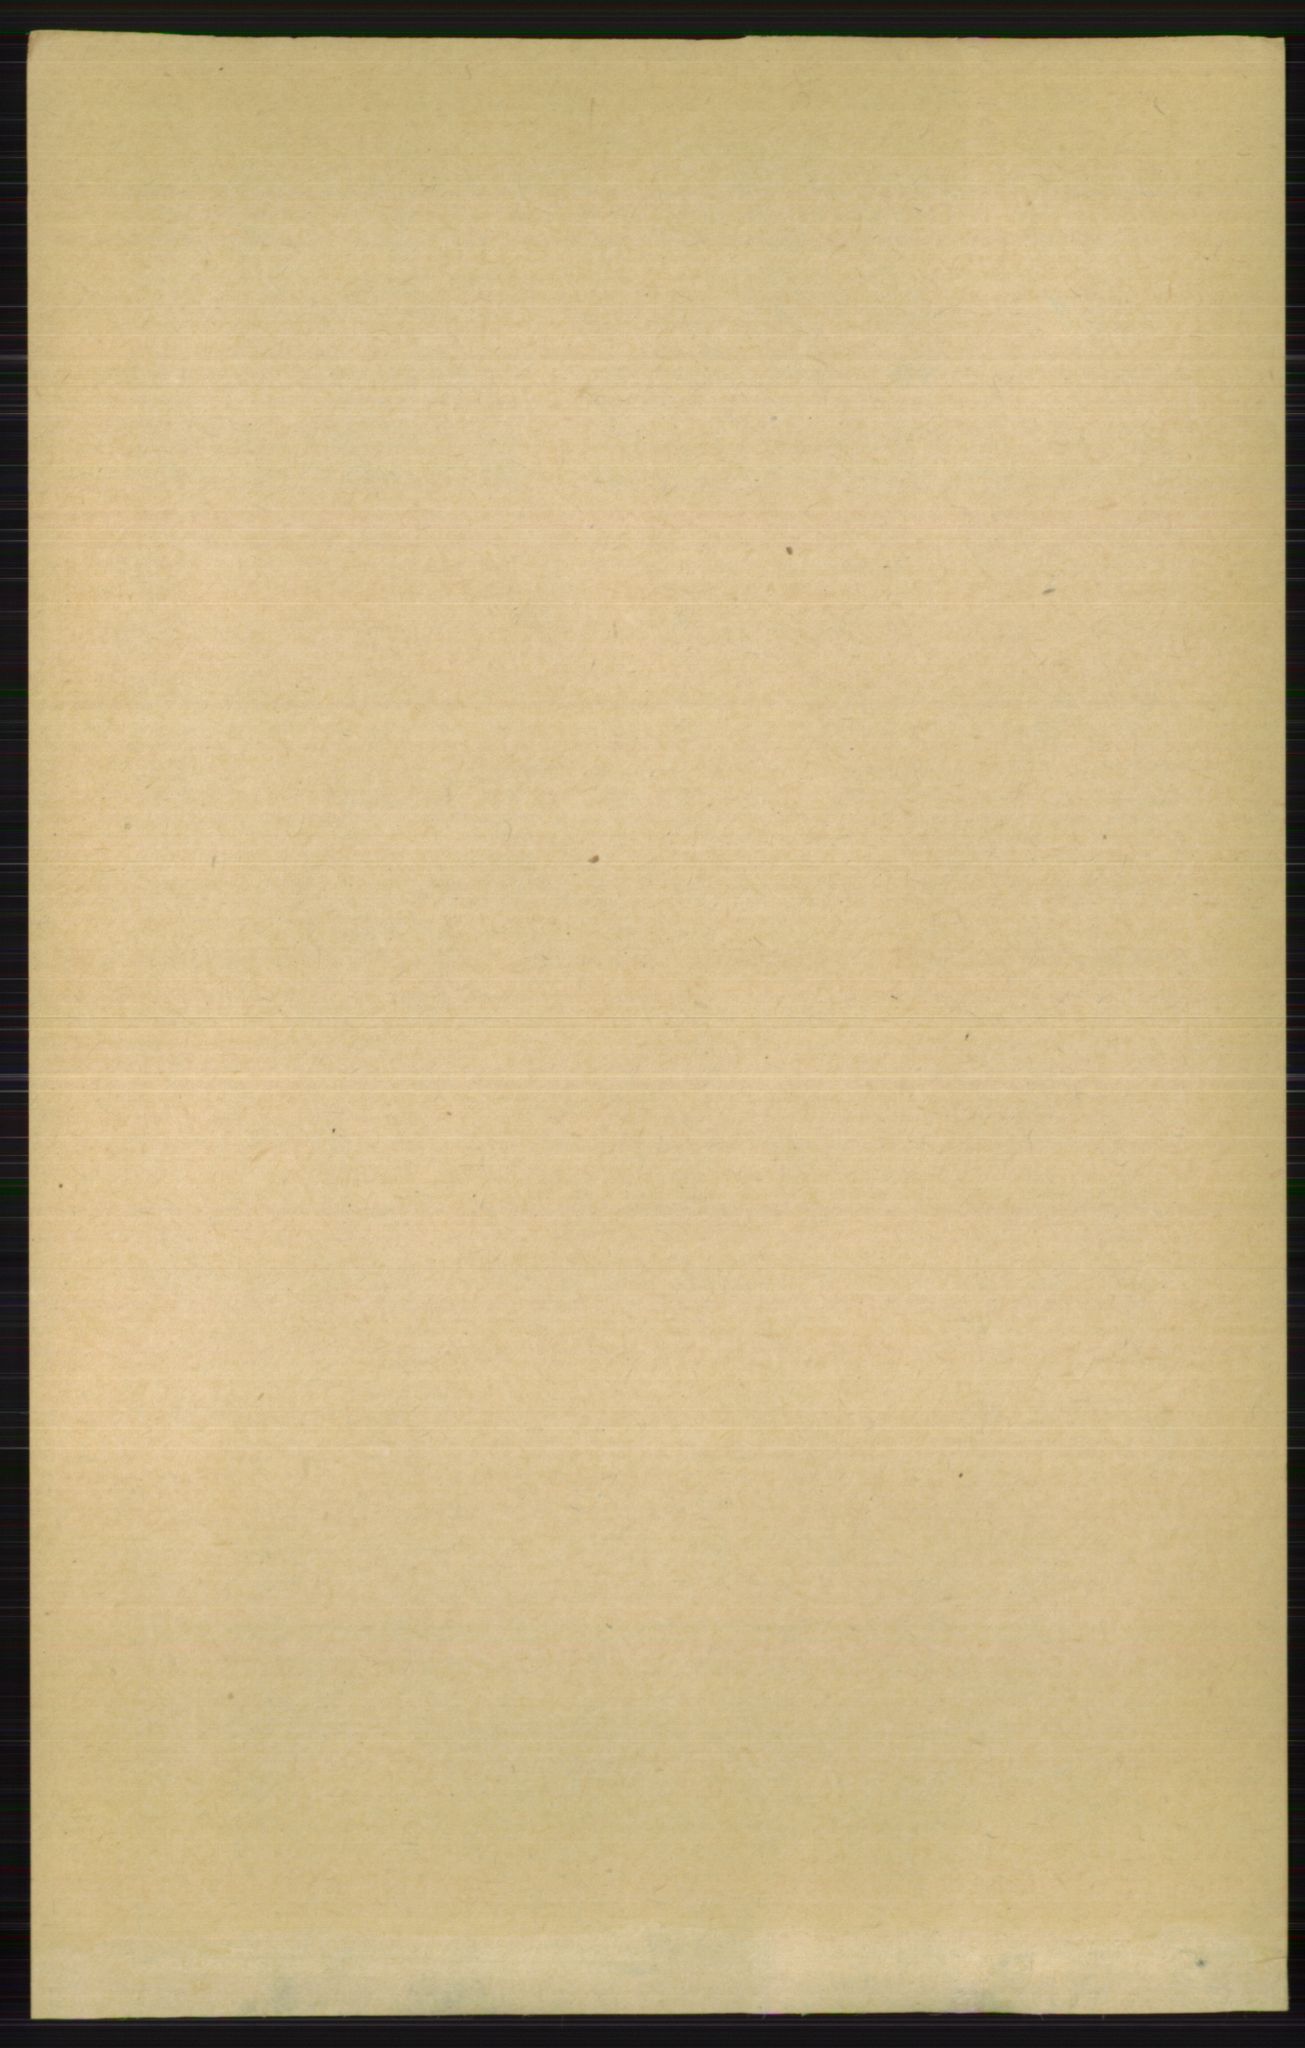 RA, Folketelling 1891 for 0621 Sigdal herred, 1891, s. 185